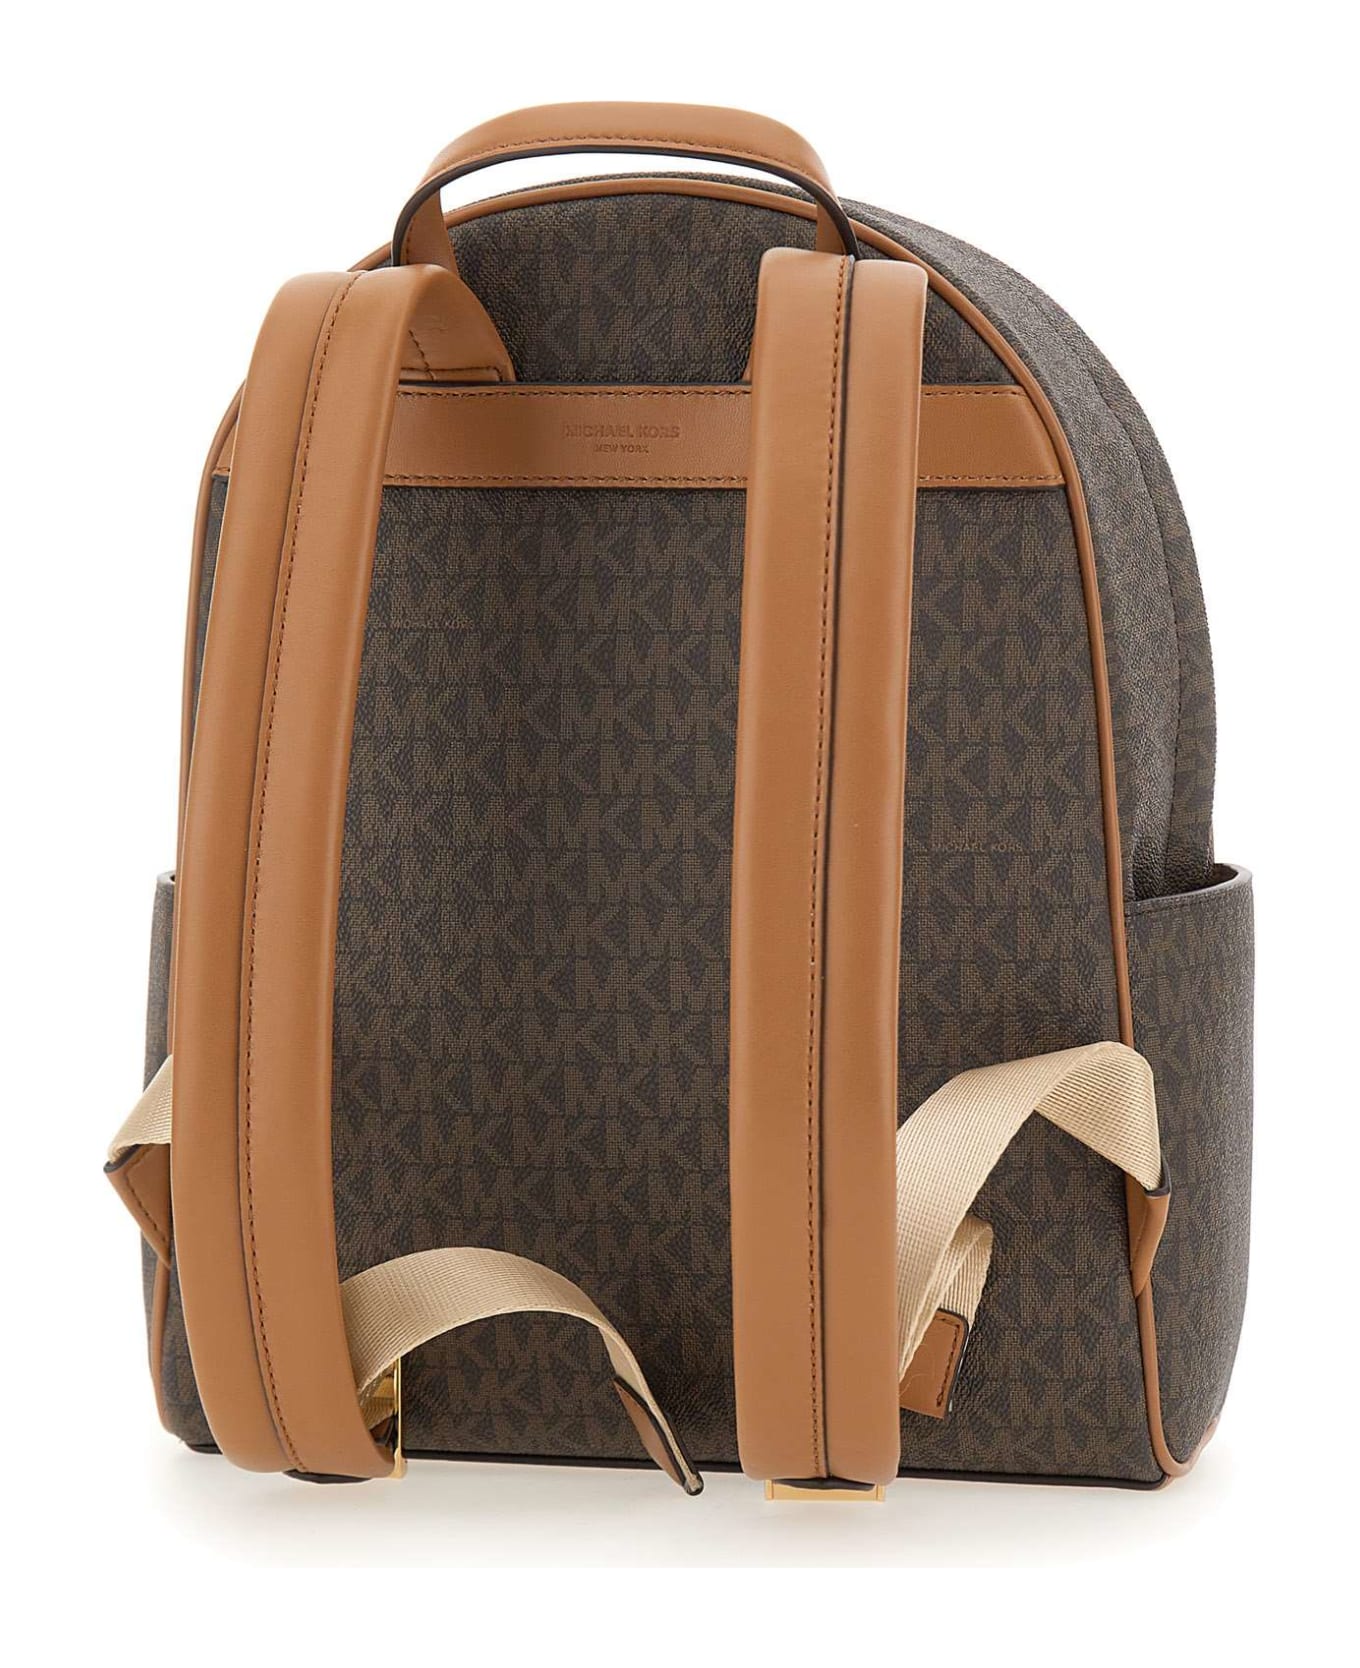 Michael Kors Leather Backpack - BROWN